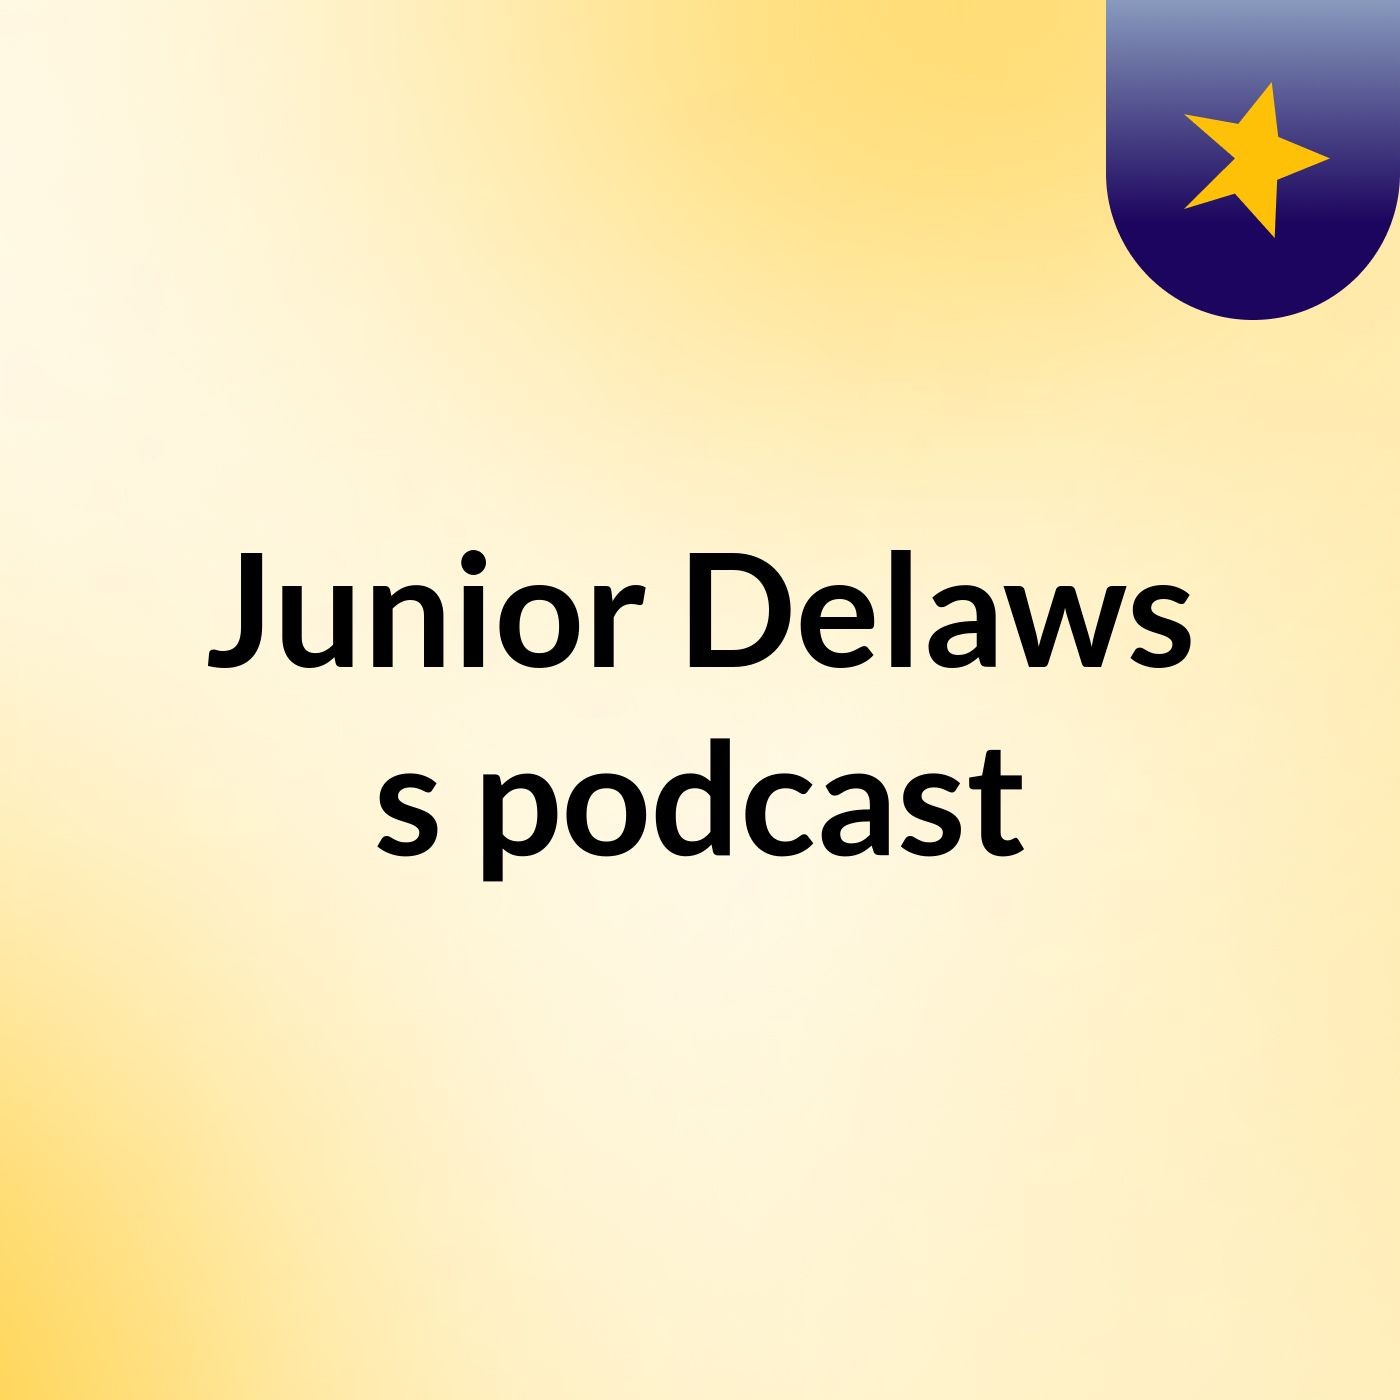 Episode 3 - Junior Delaws's podcast